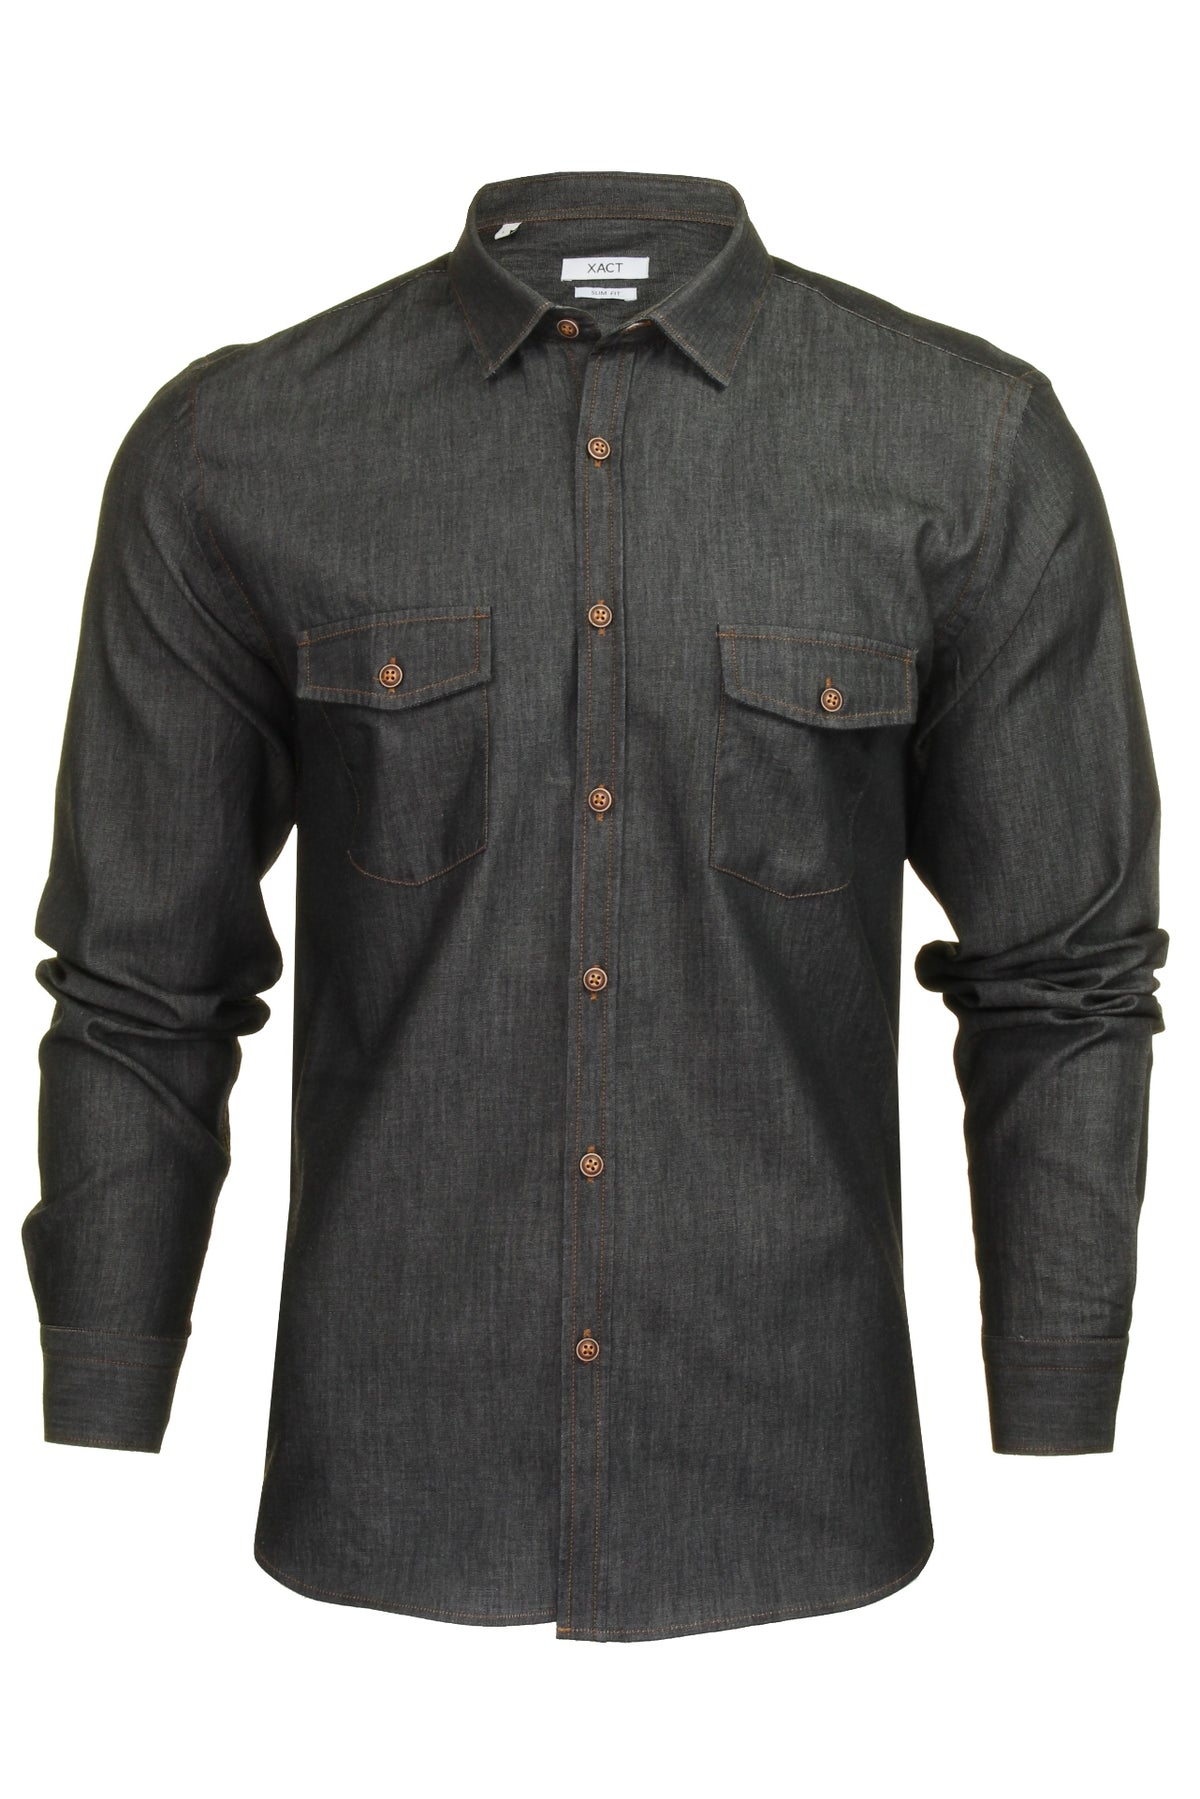 Xact Mens Long Sleeved Denim Shirt - Slim Fit, 01, Xsh1074, Black